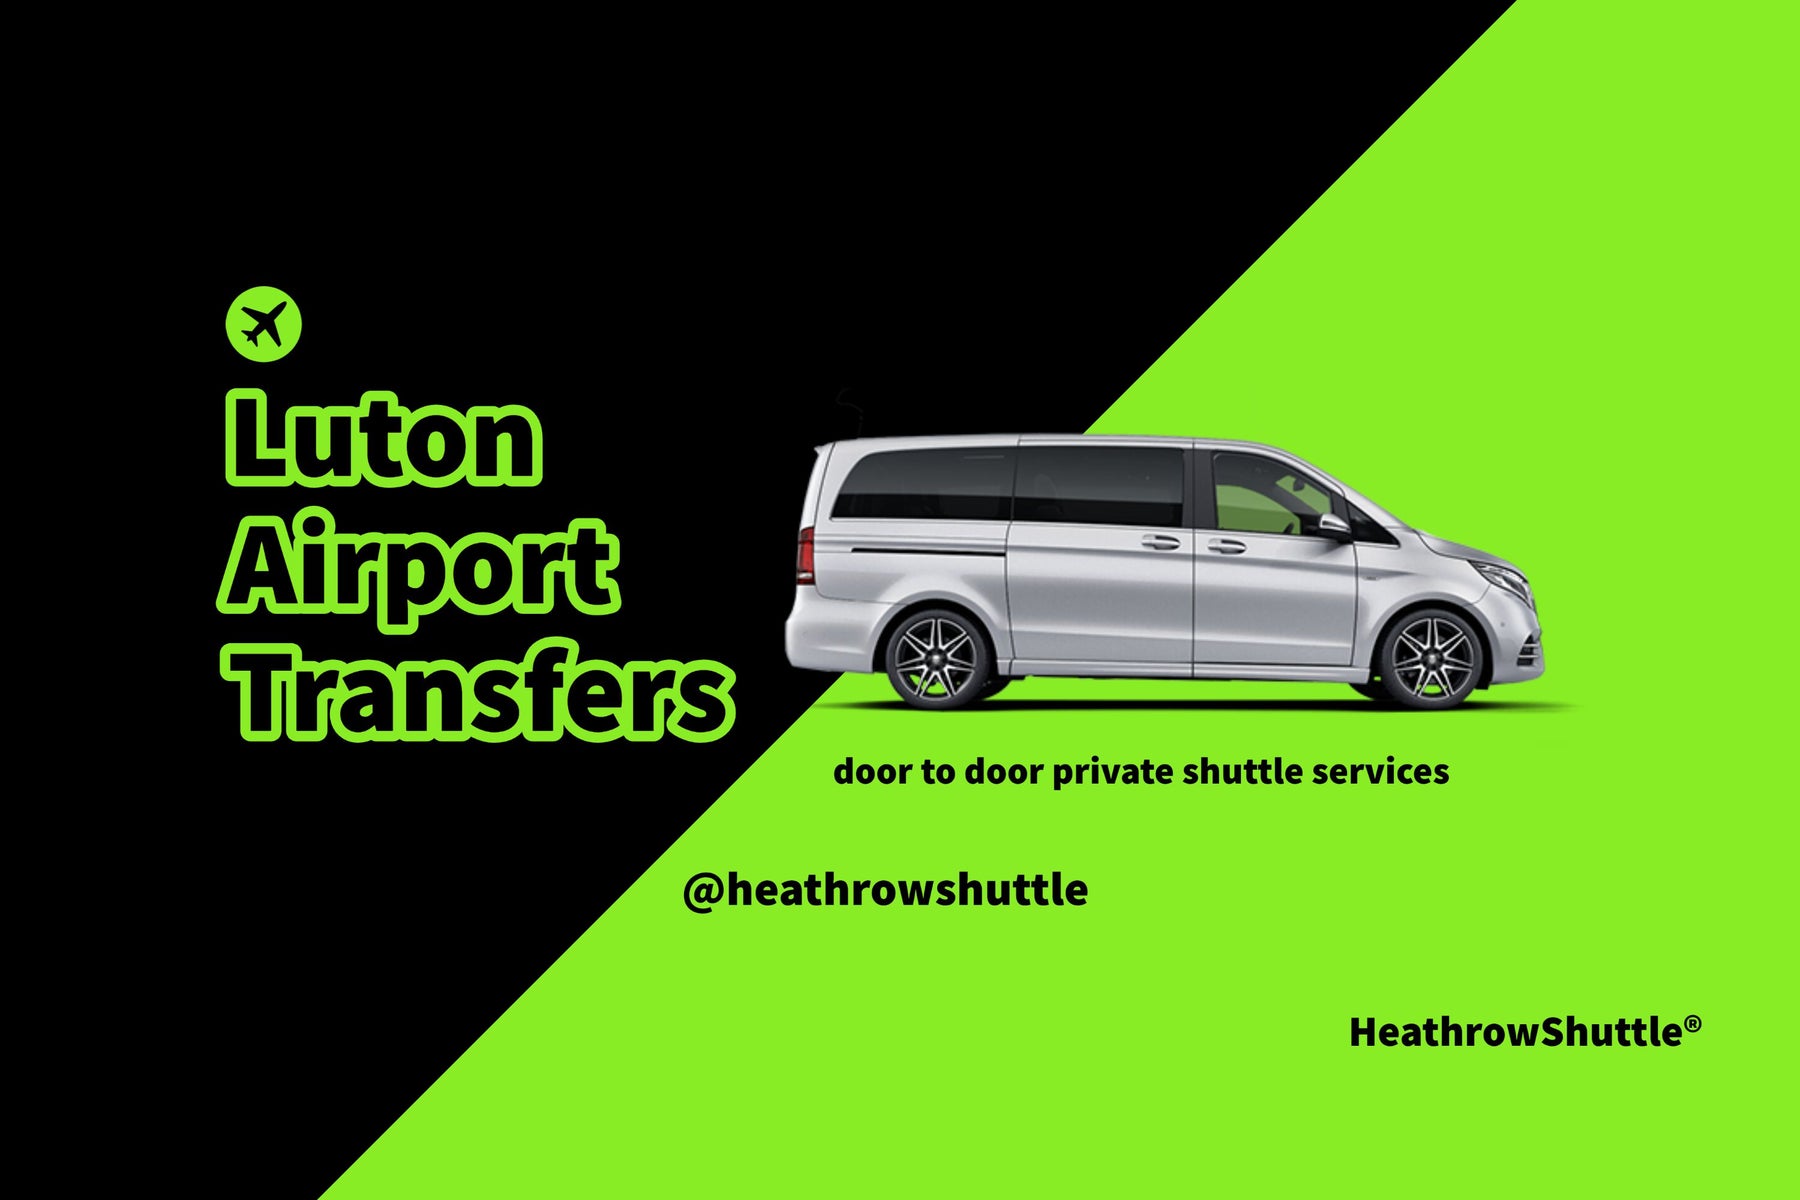 London Luton Airport Transfers